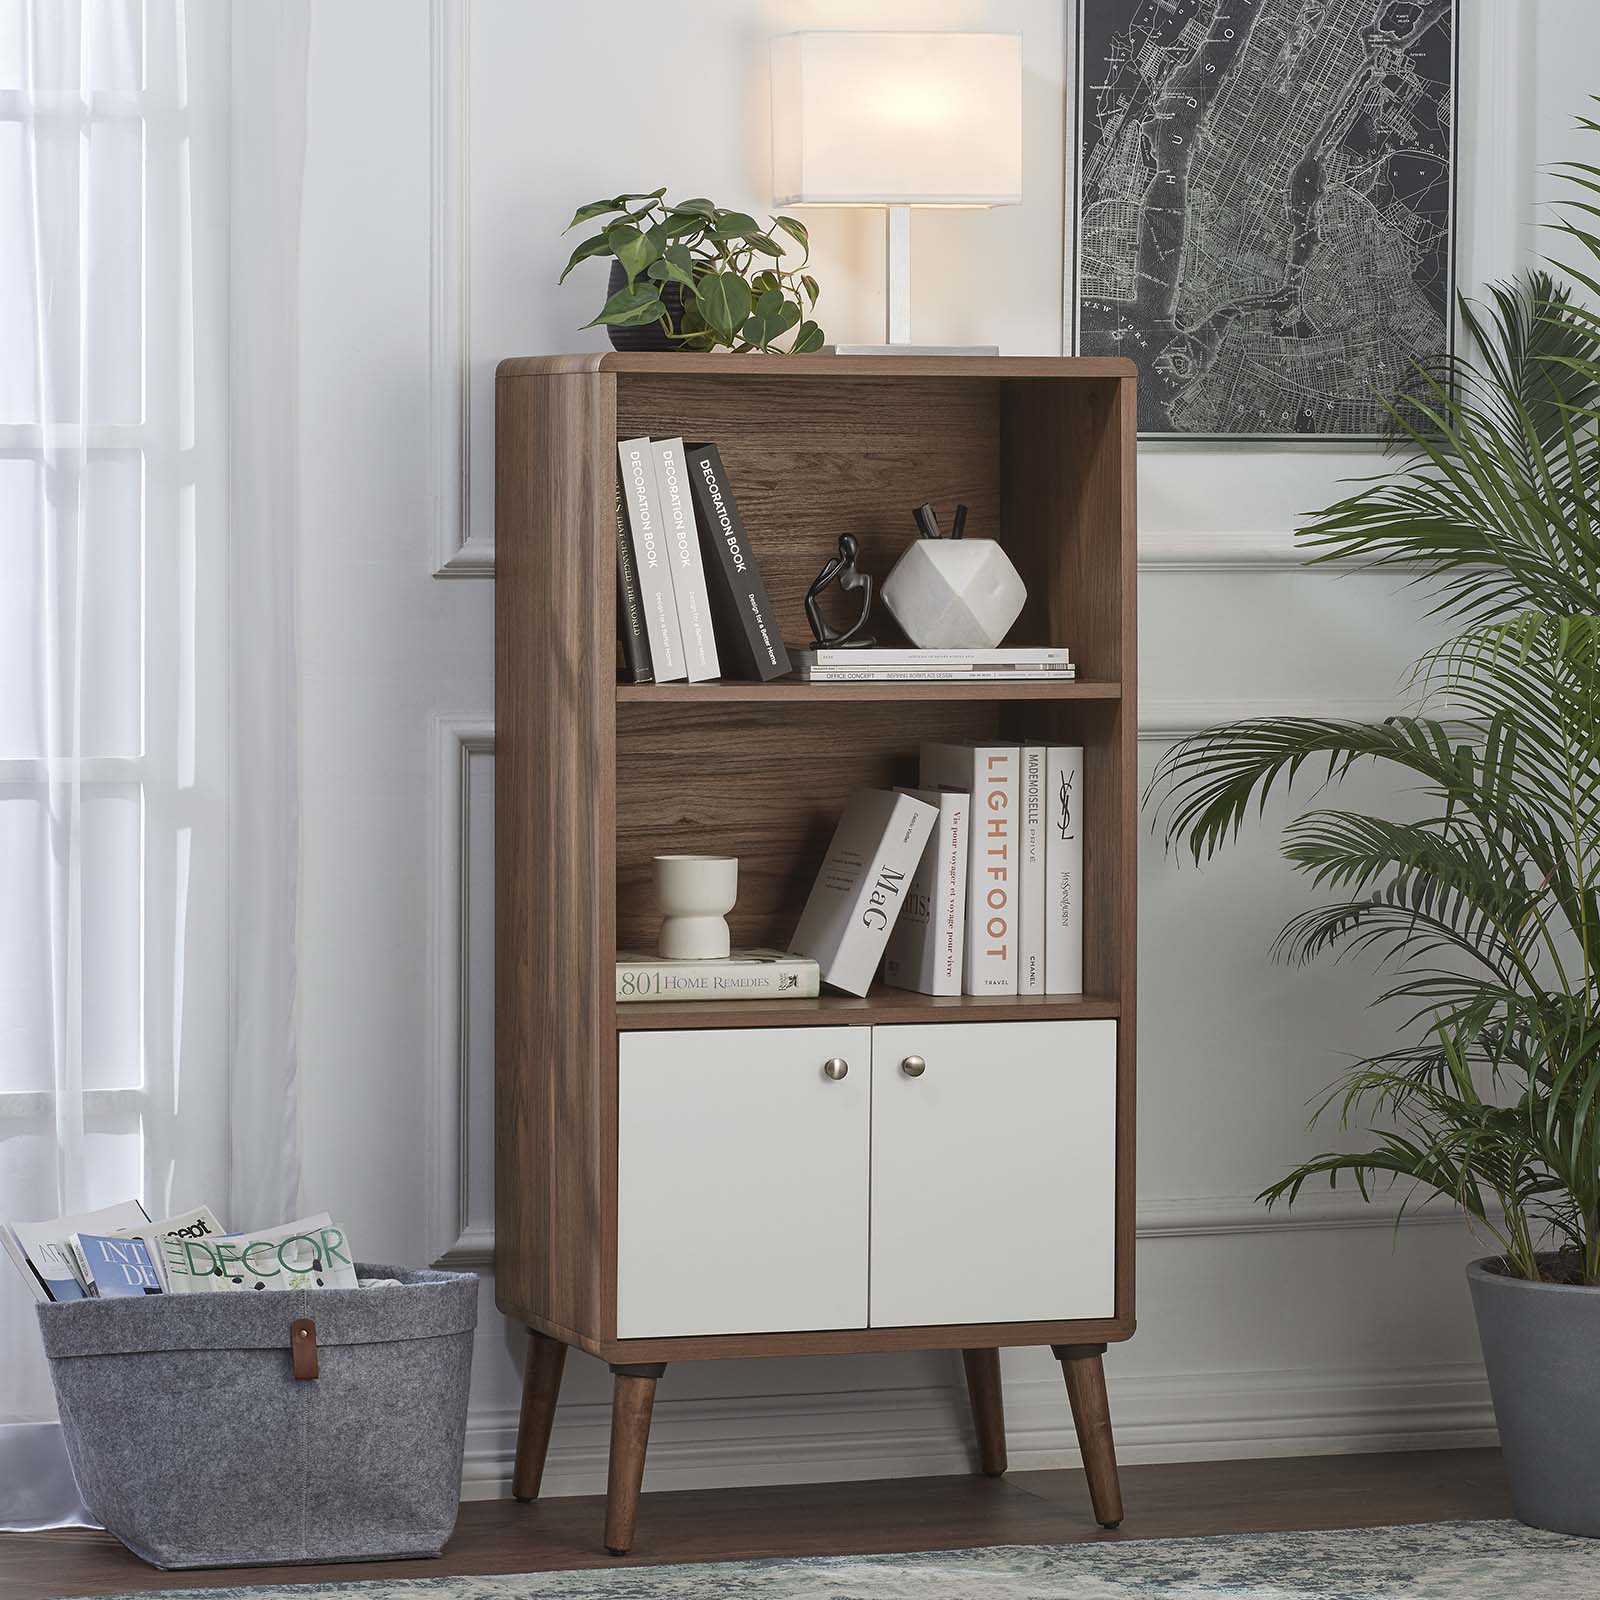 Transmit Display Cabinet Bookshelf - East Shore Modern Home Furnishings